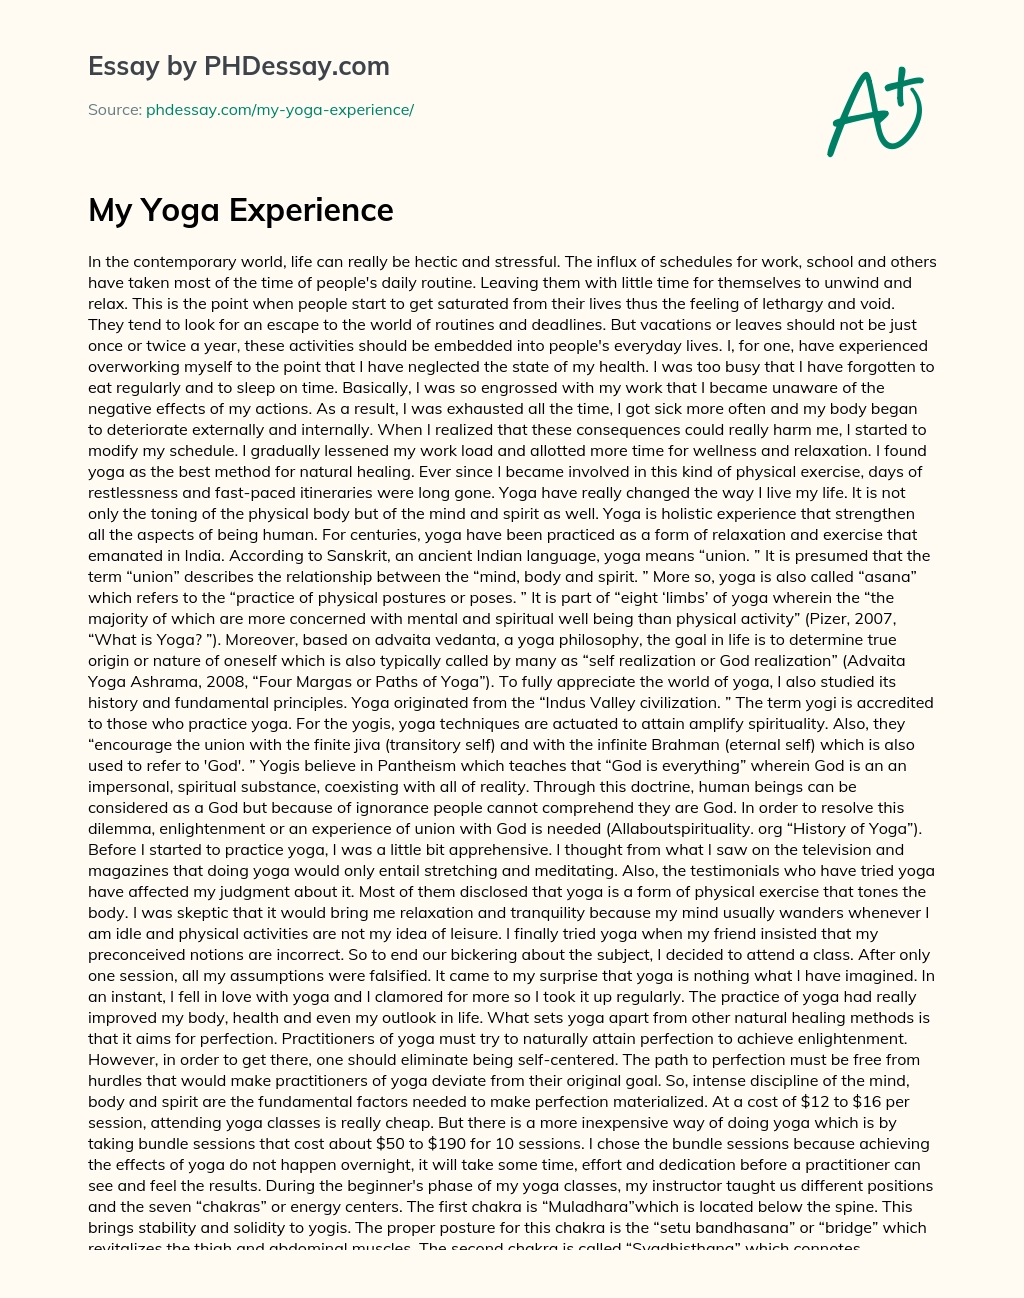 My Yoga Experience essay